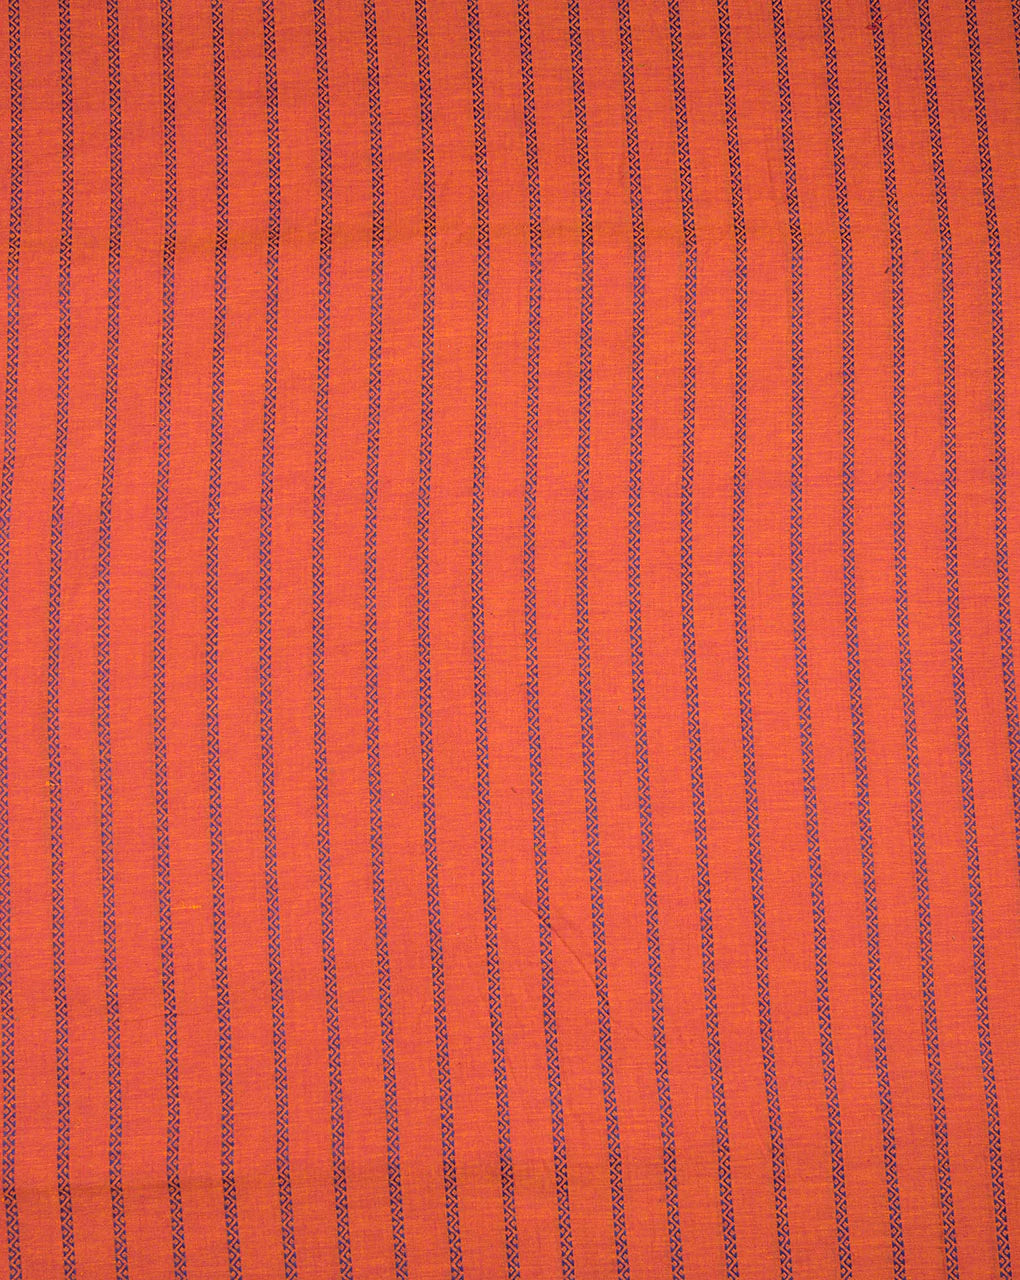 Woven Loom TextuDobby Cotton Fabric - Fabriclore.com